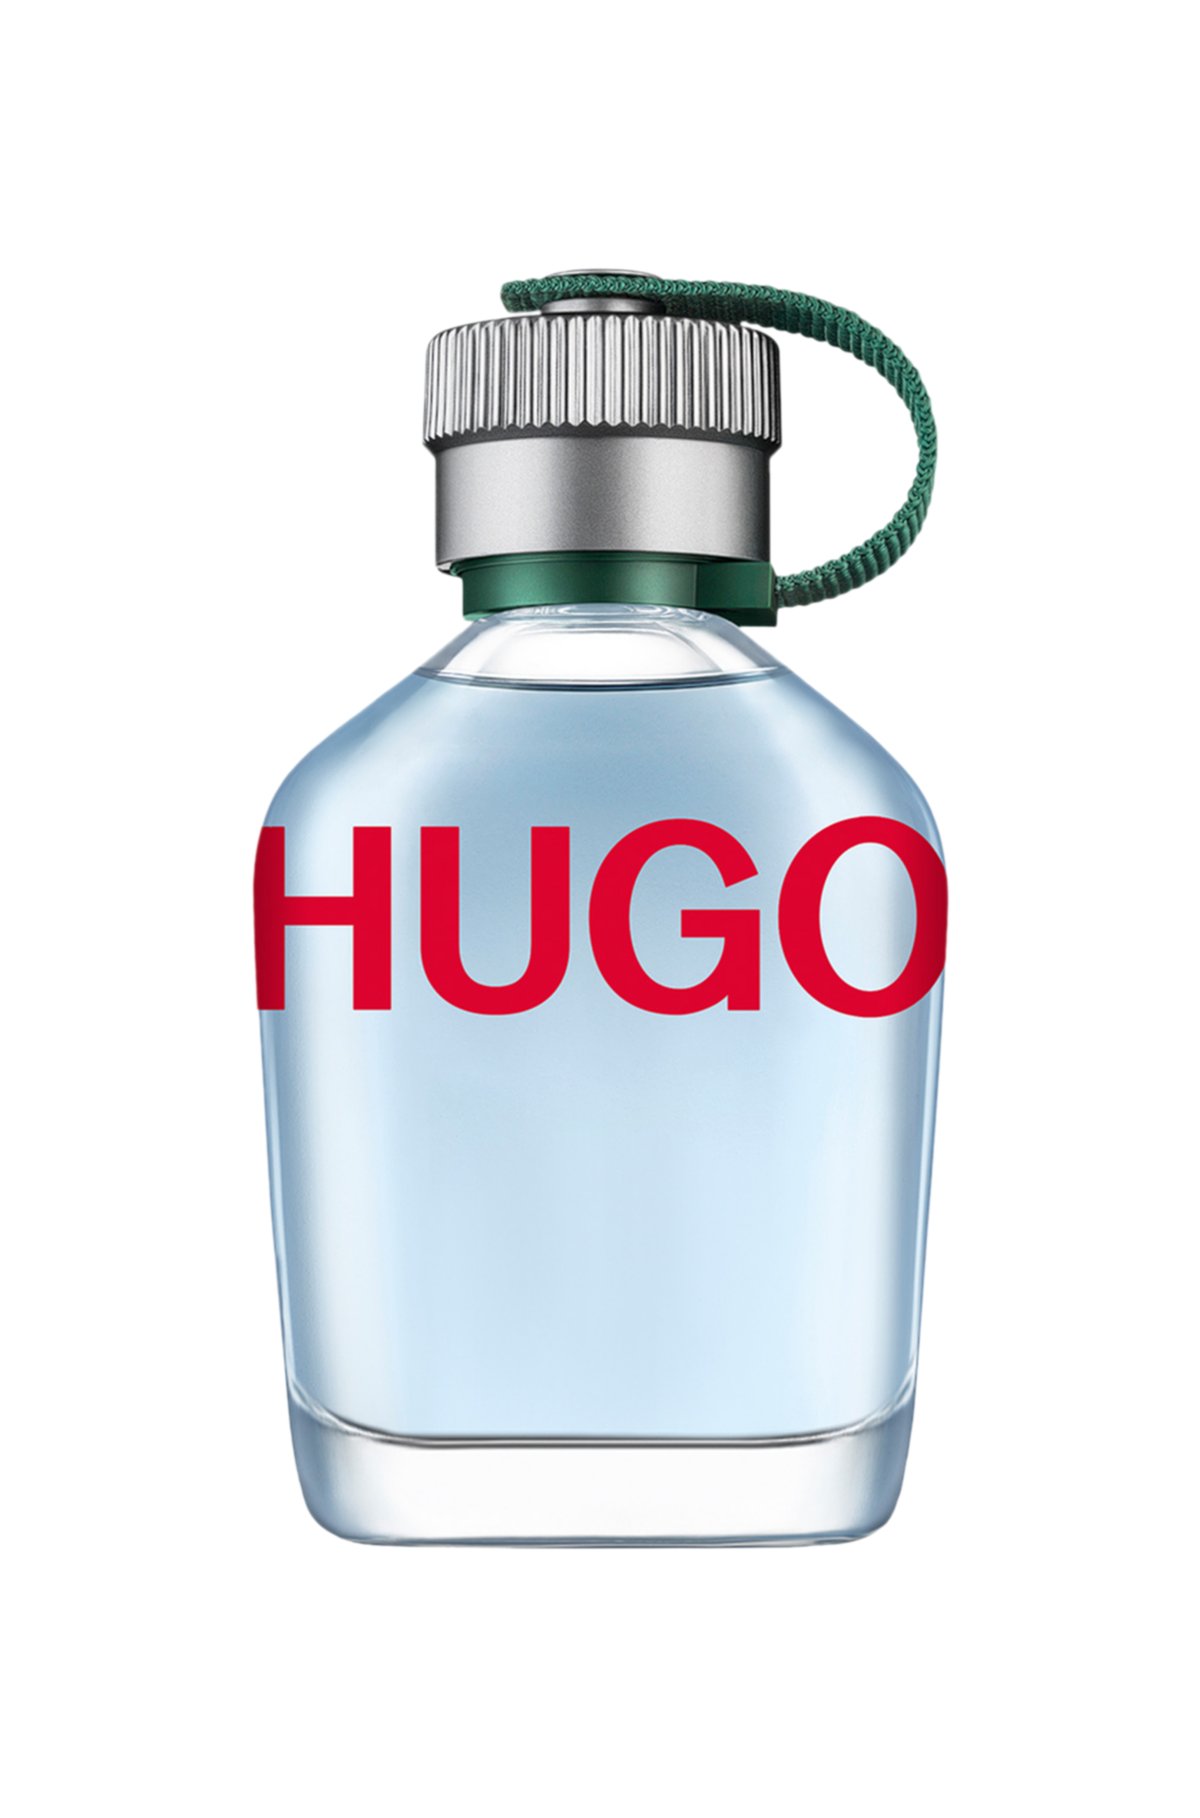 Historicus transactie Verrijken HUGO - HUGO Man eau de toilette 75ml